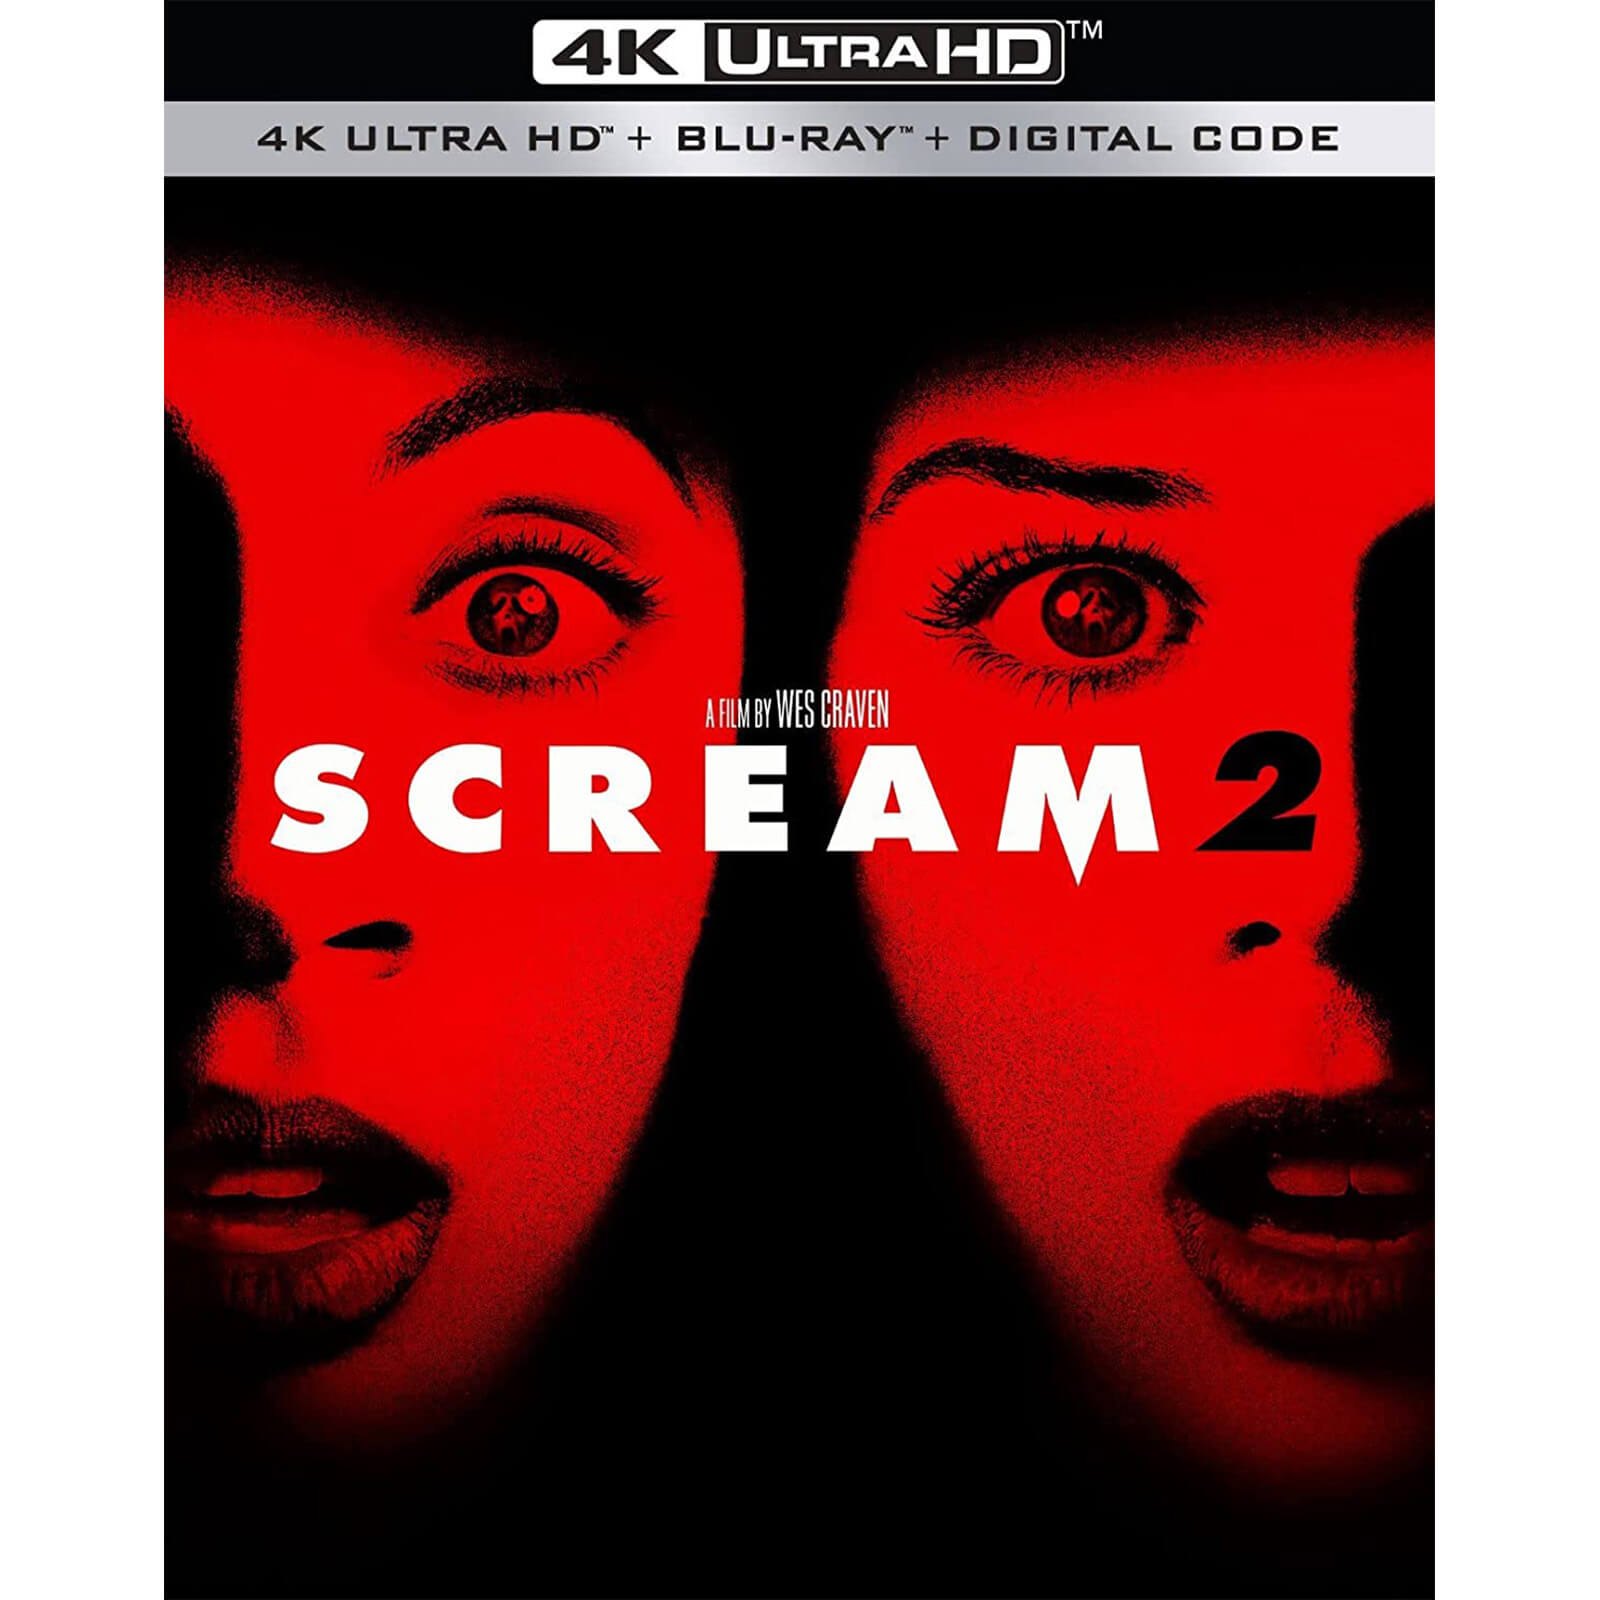 Miramax Scream 2 4k ultra hd (includes blu-ray + digital)